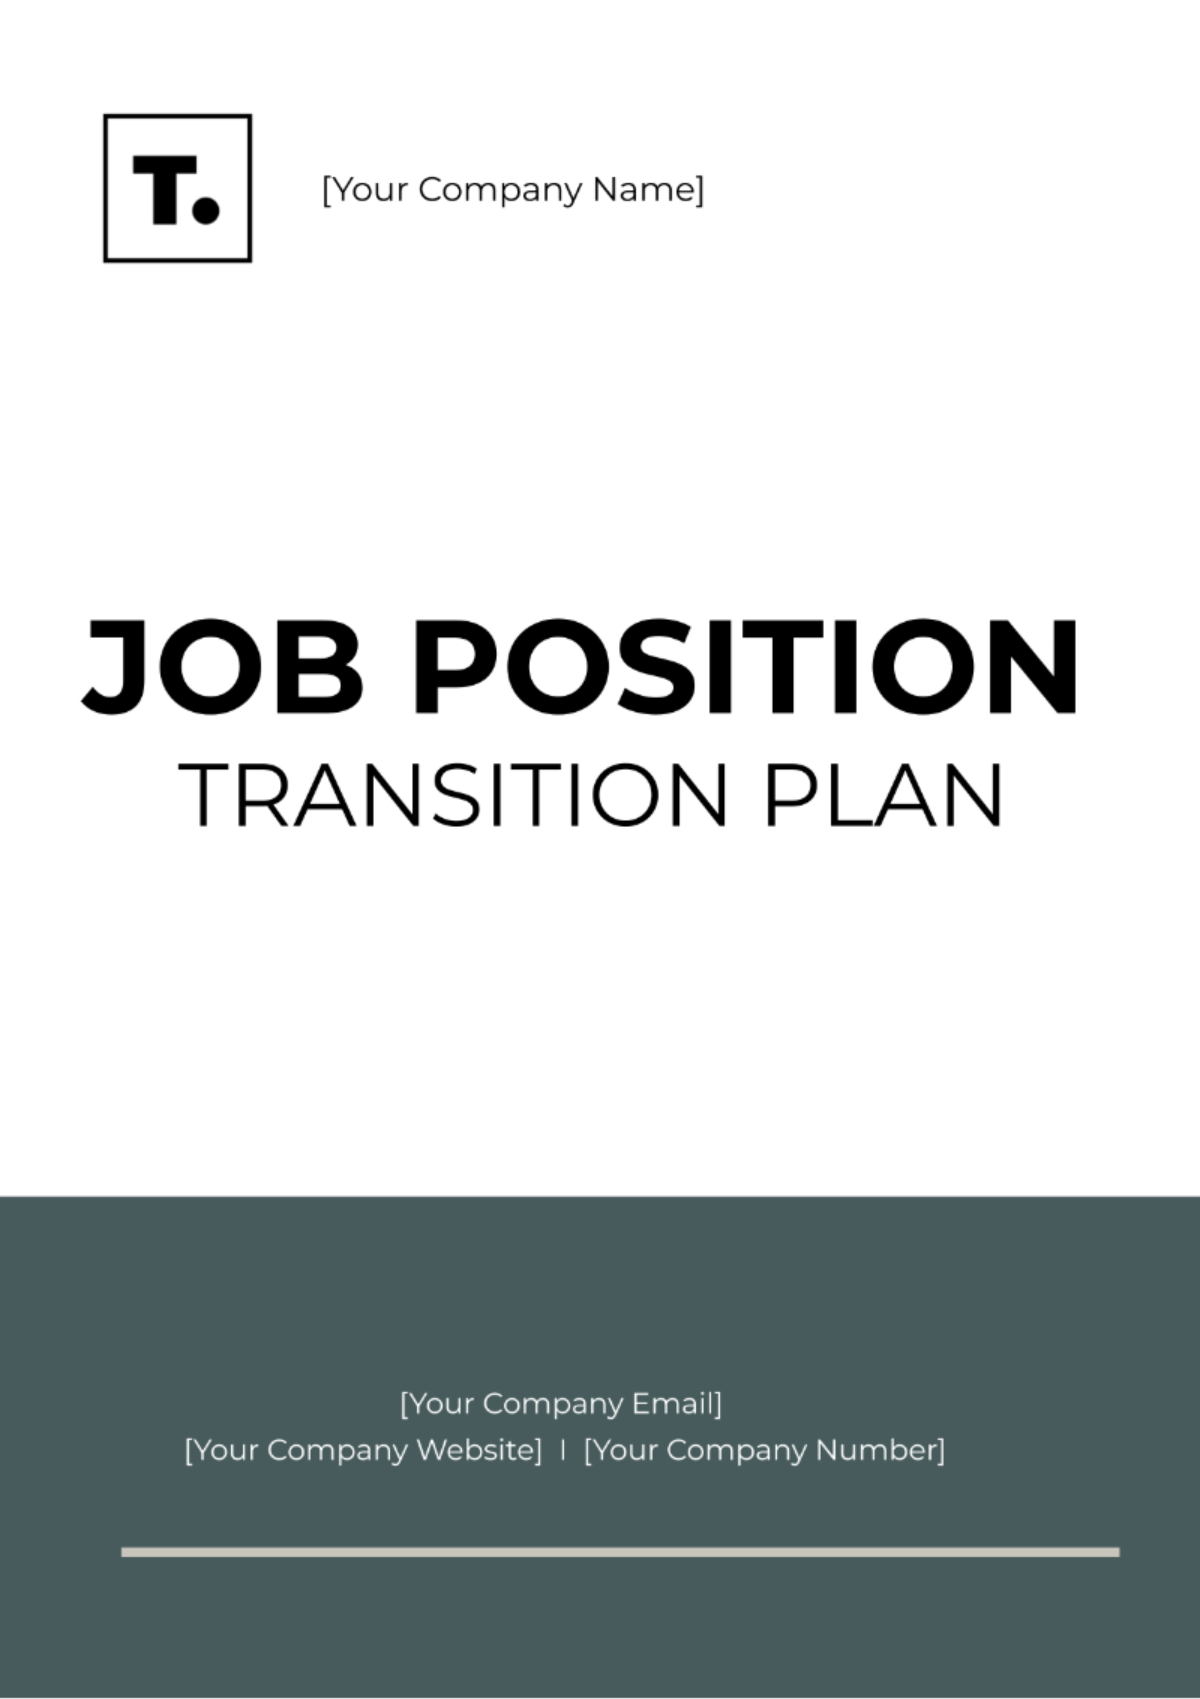 Job Position Transition Plan Template